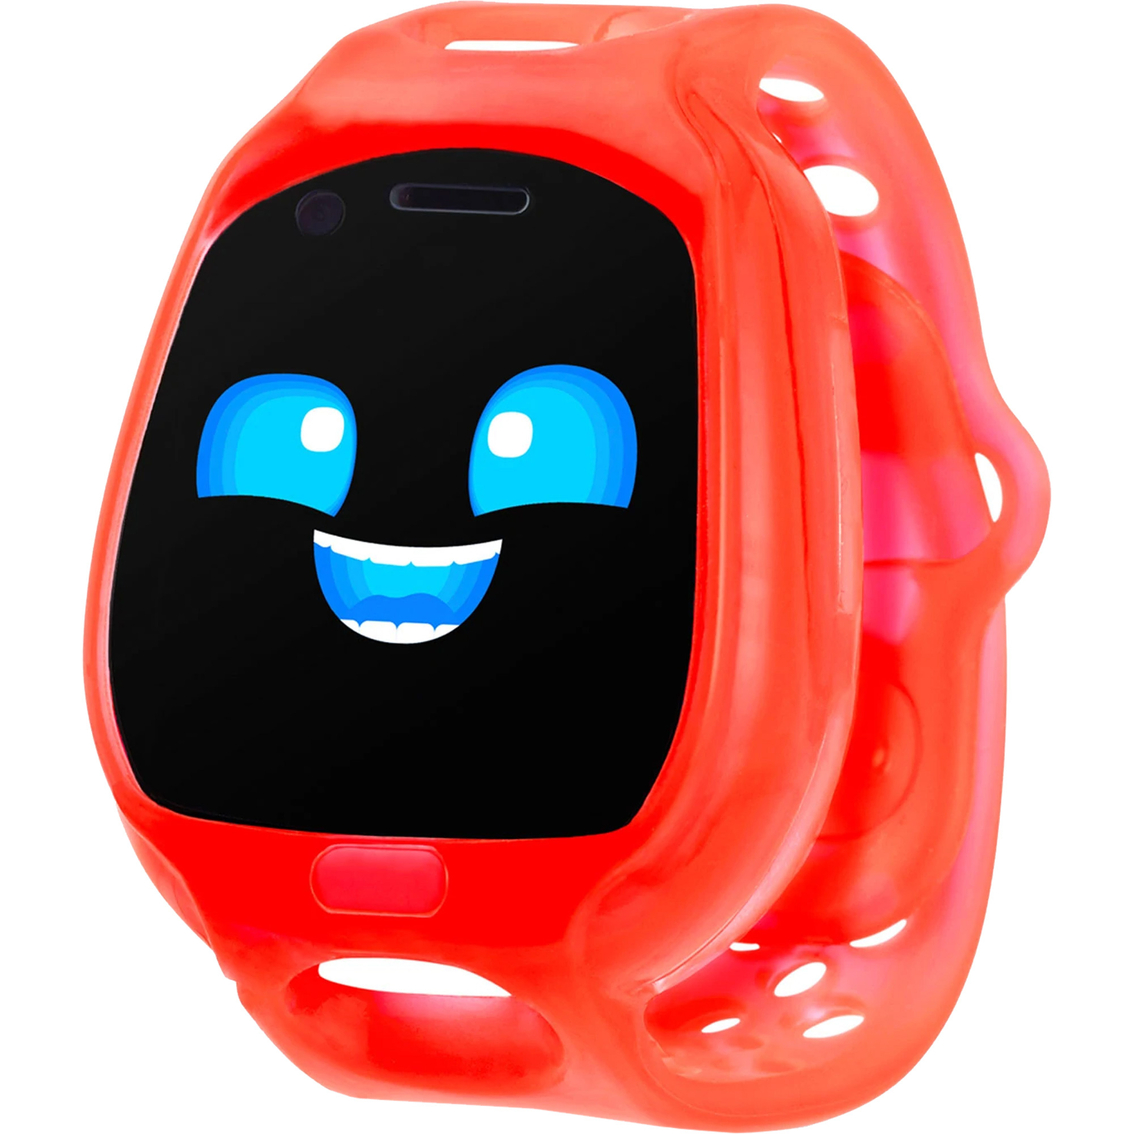 Little Tikes Tobi 2 Robot Smartwatch Red - Image 3 of 7